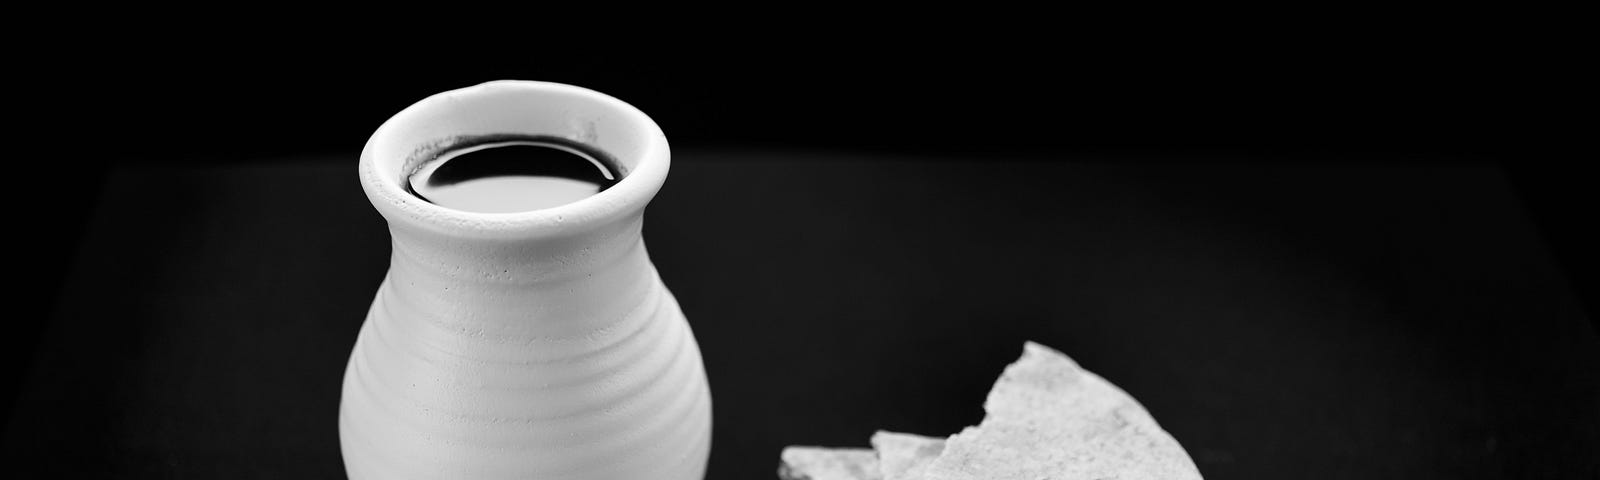 White, ceramic urn of dark wine; white ceramic plate of broken flatbread. Black background.